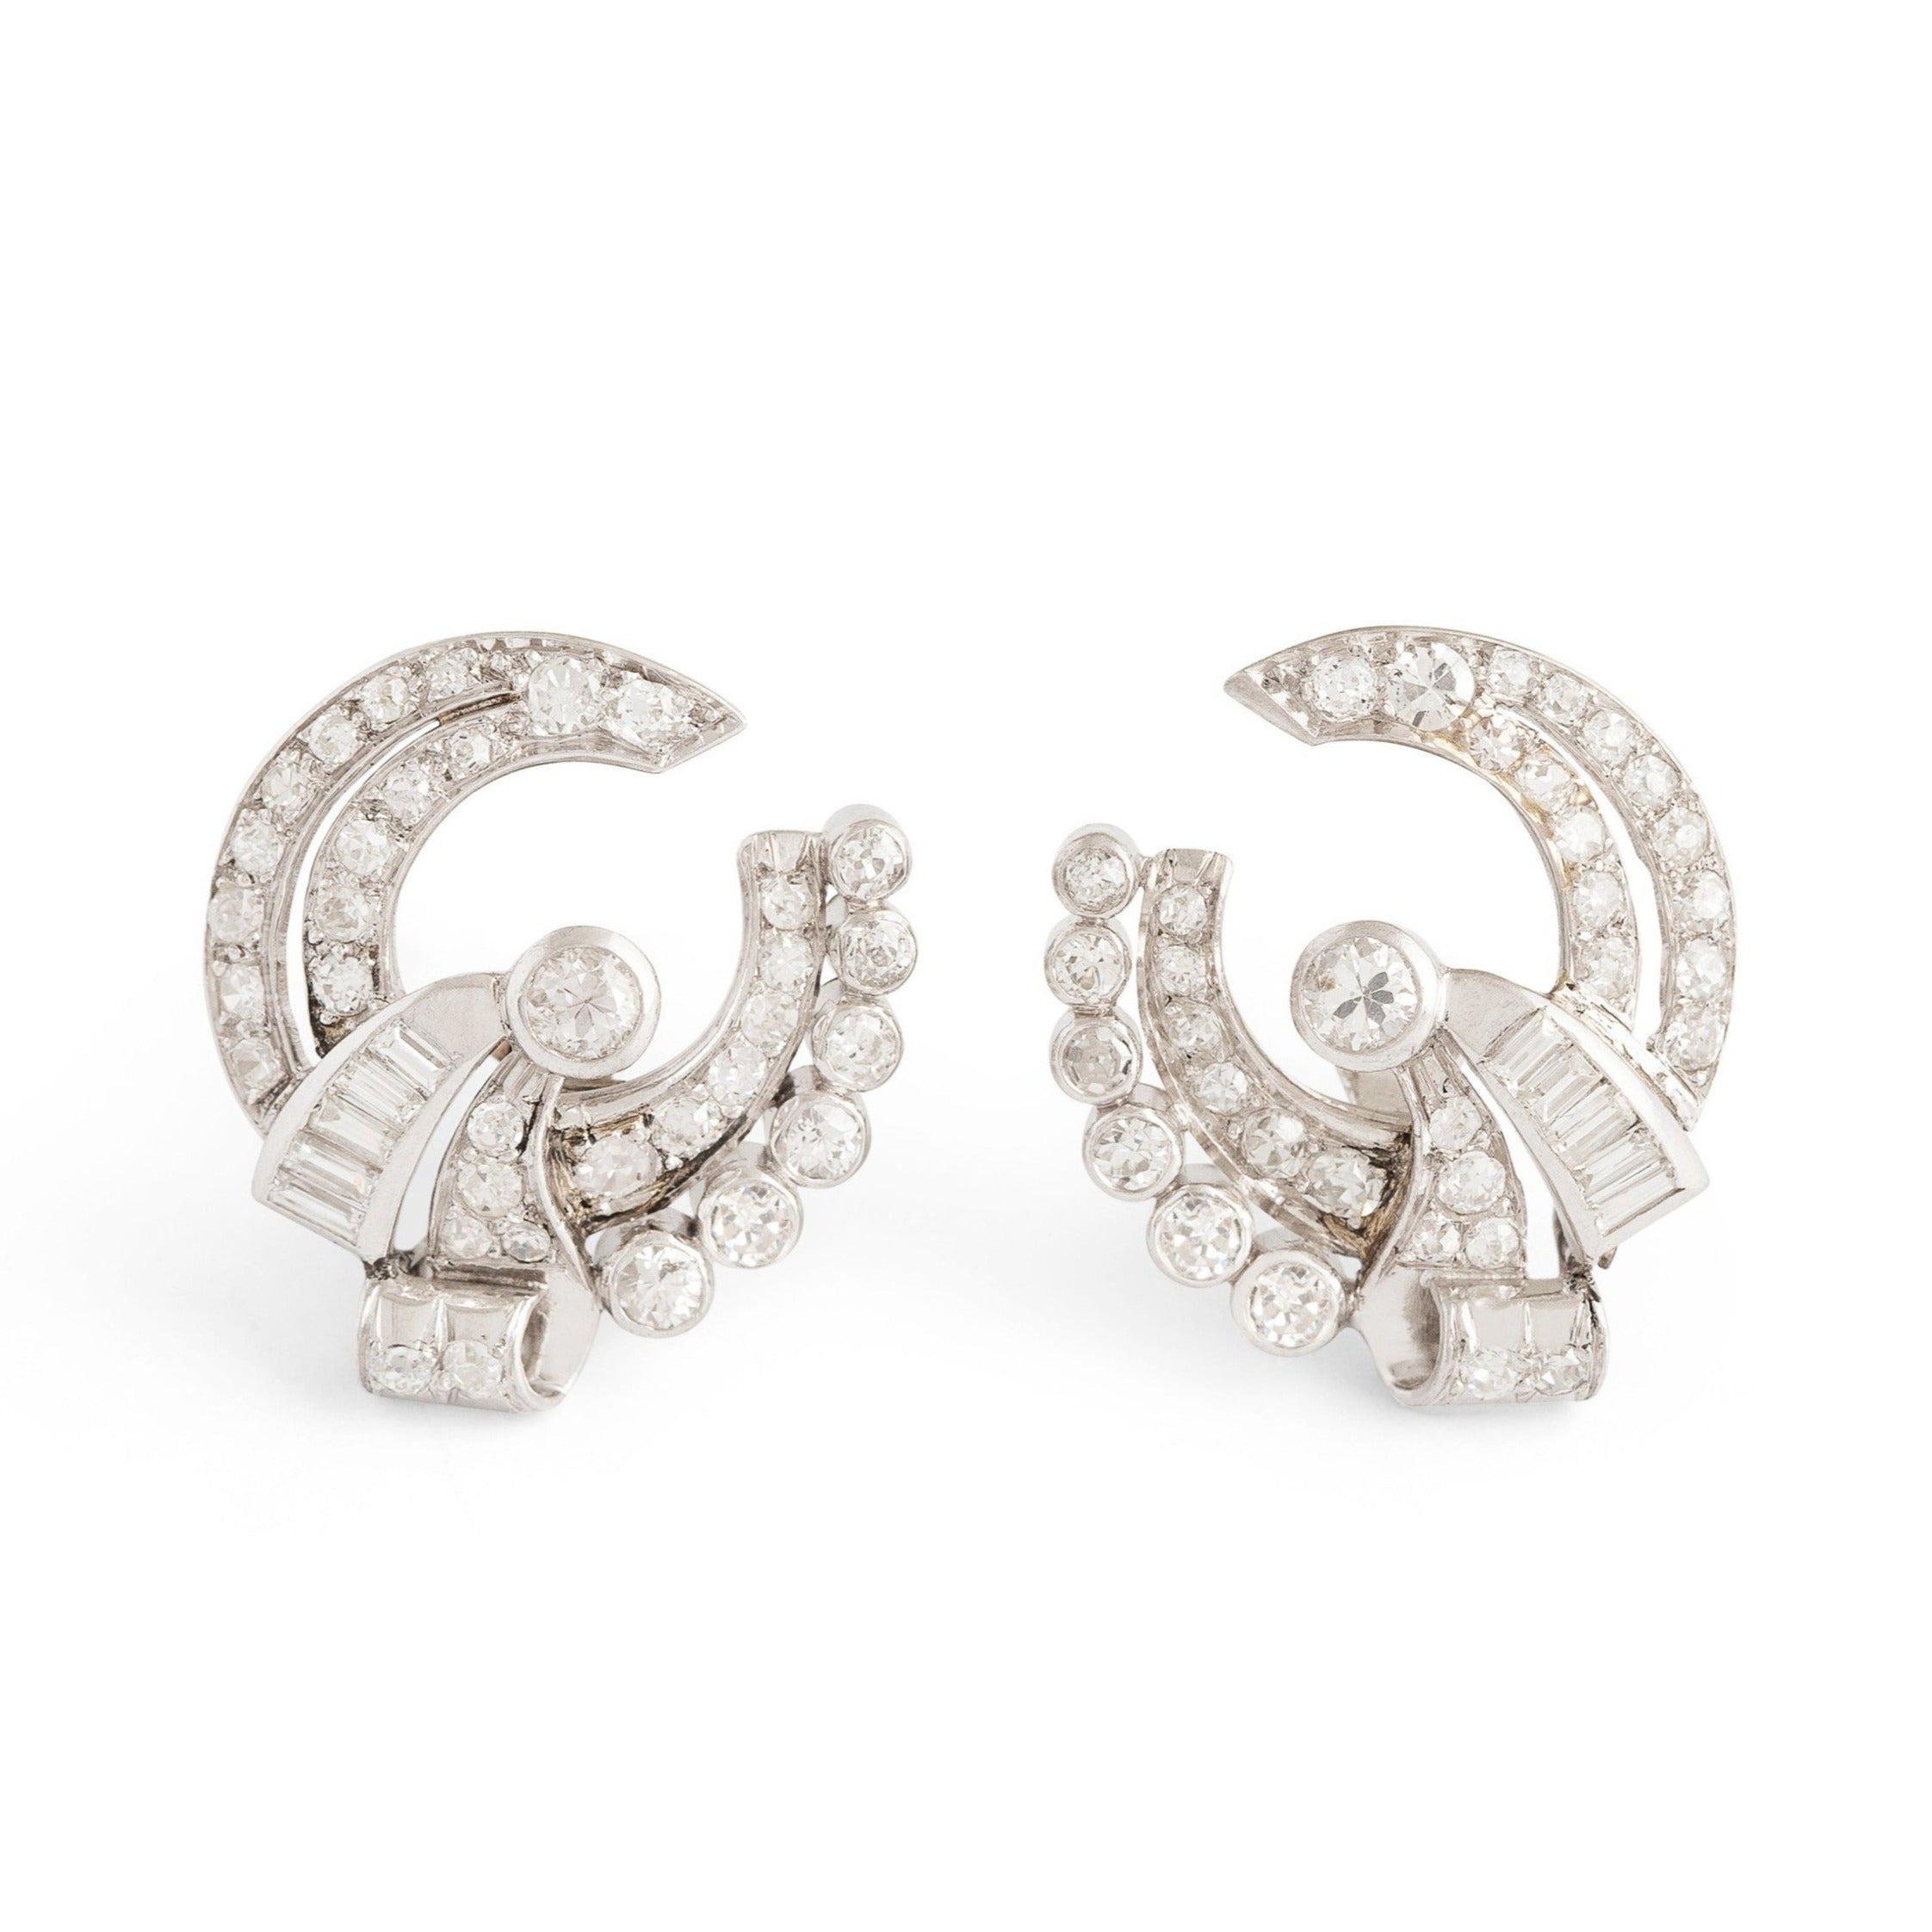 Buy Platinum Earrings Online | BlueStone.com - India's #1 Online Jewellery  Brand